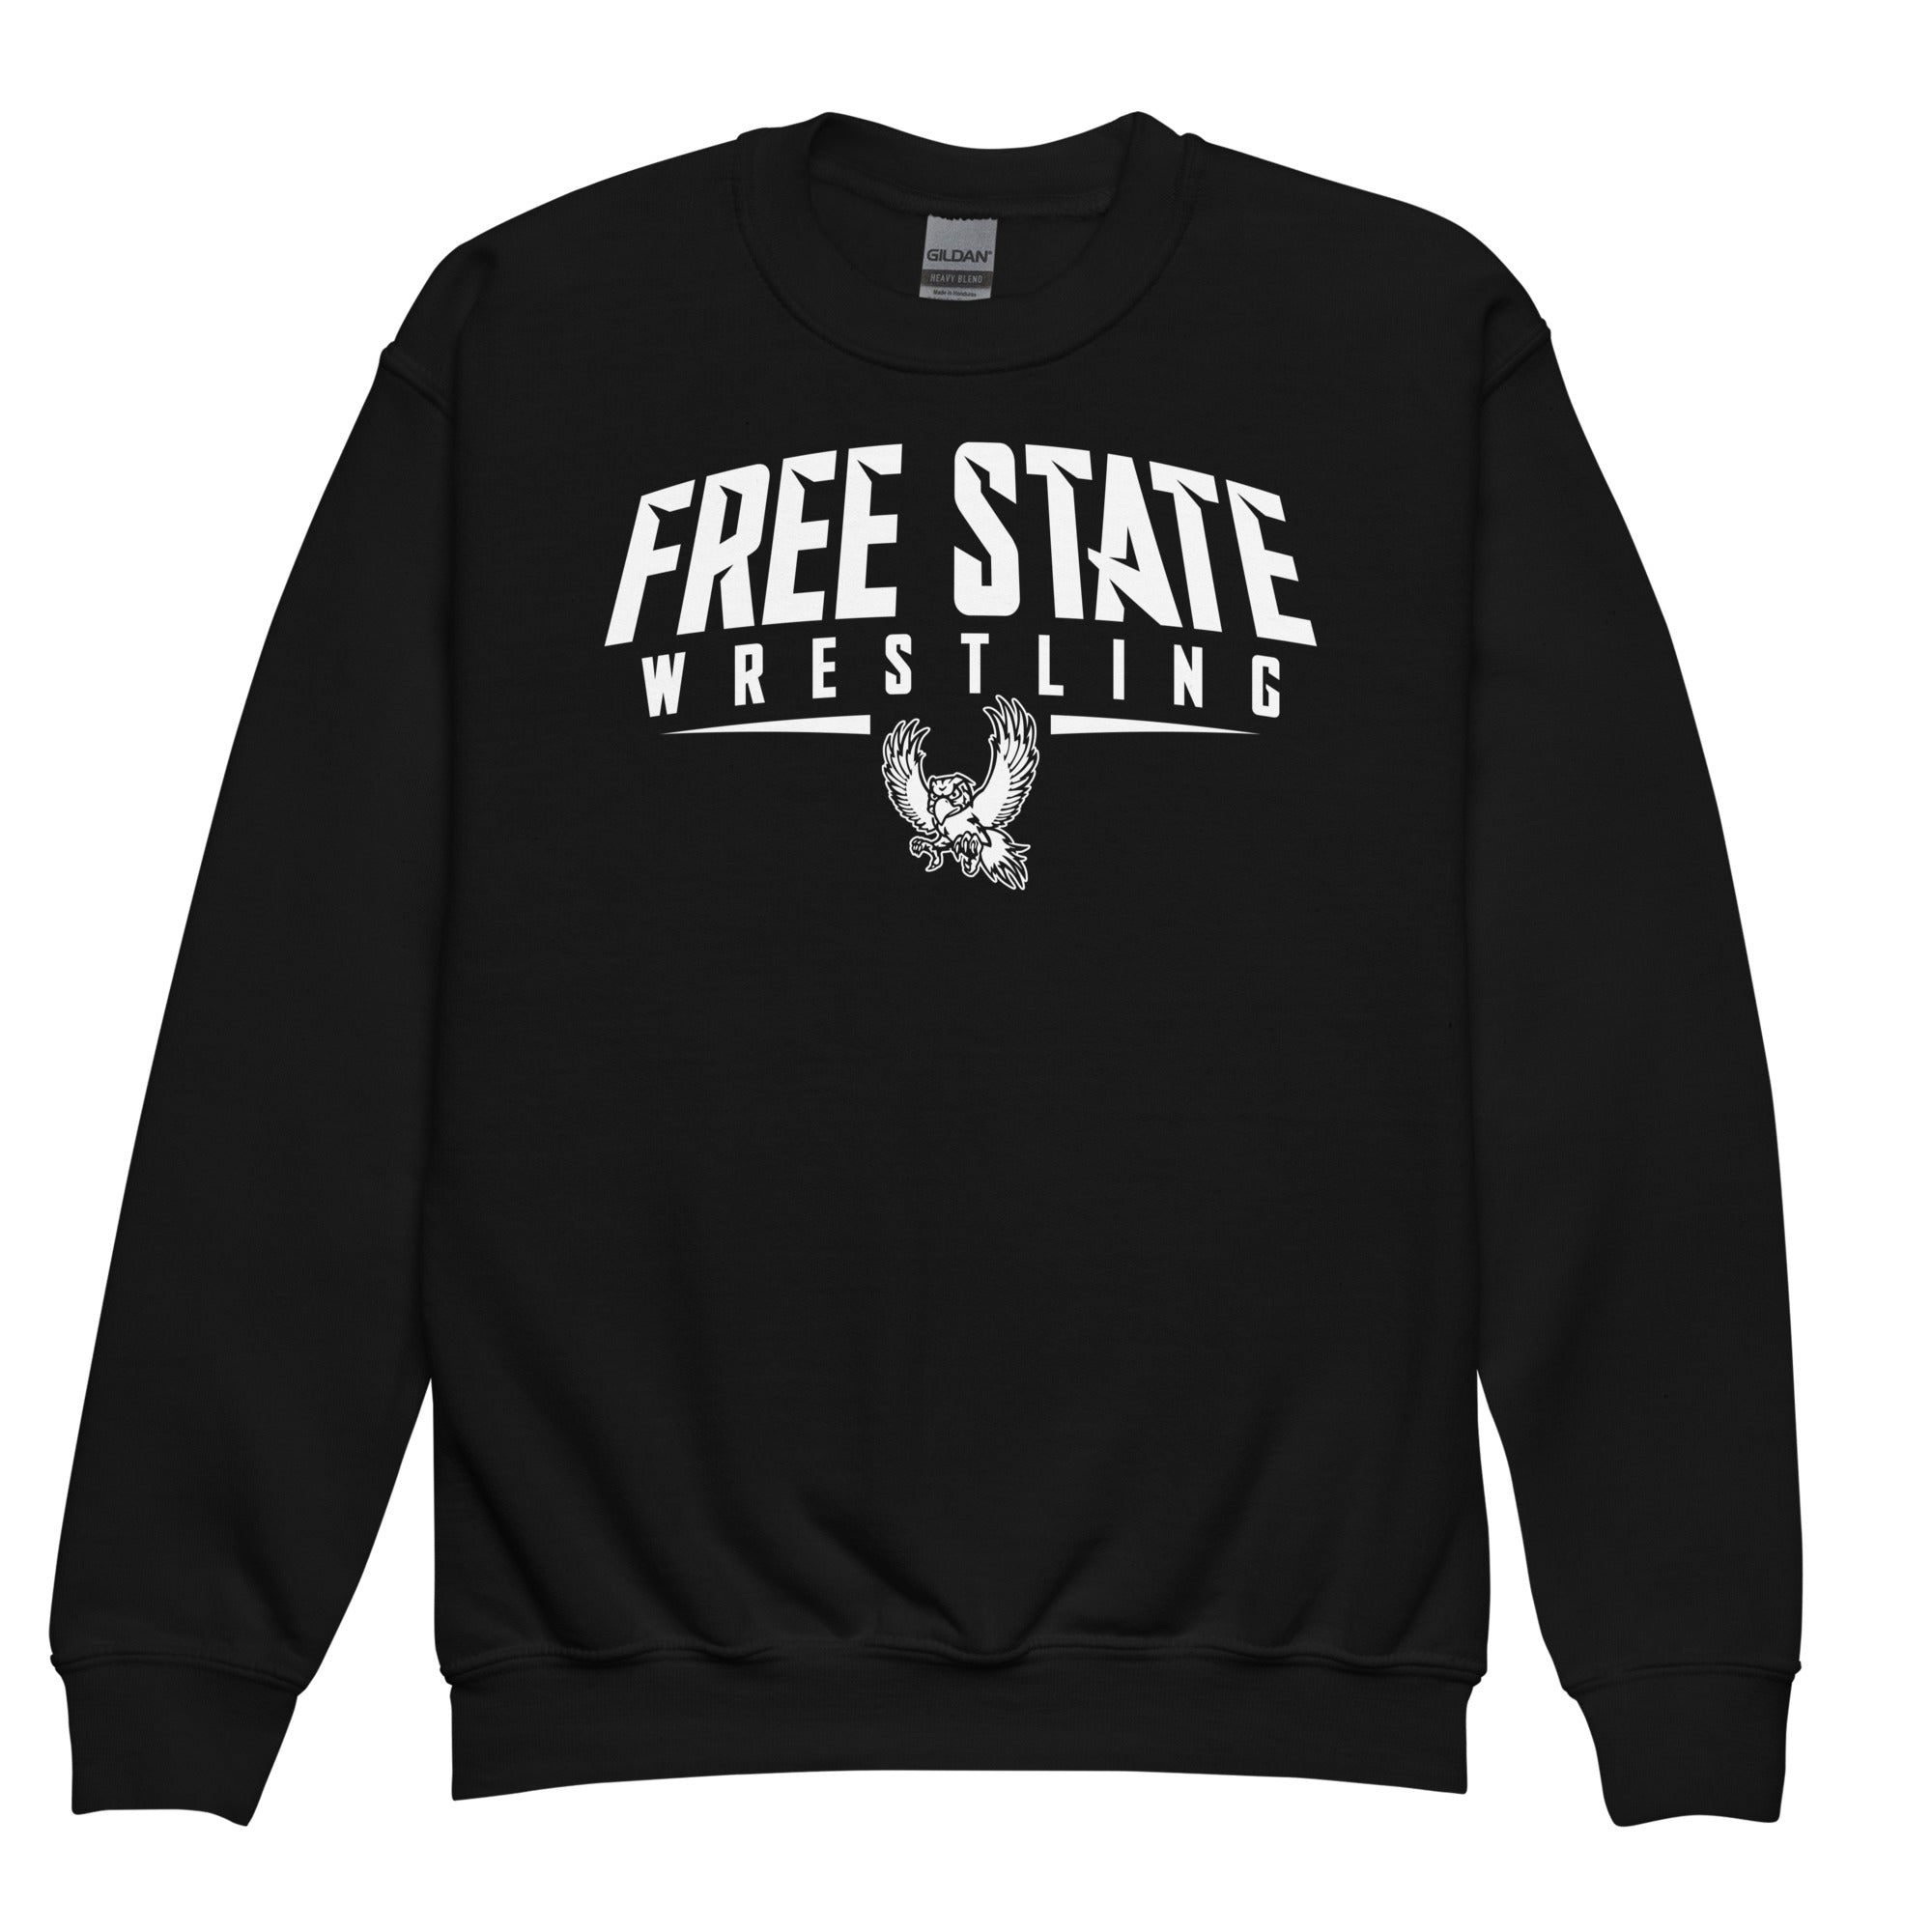 Lawrence Free State Wrestling Youth Crewneck Sweatshirt